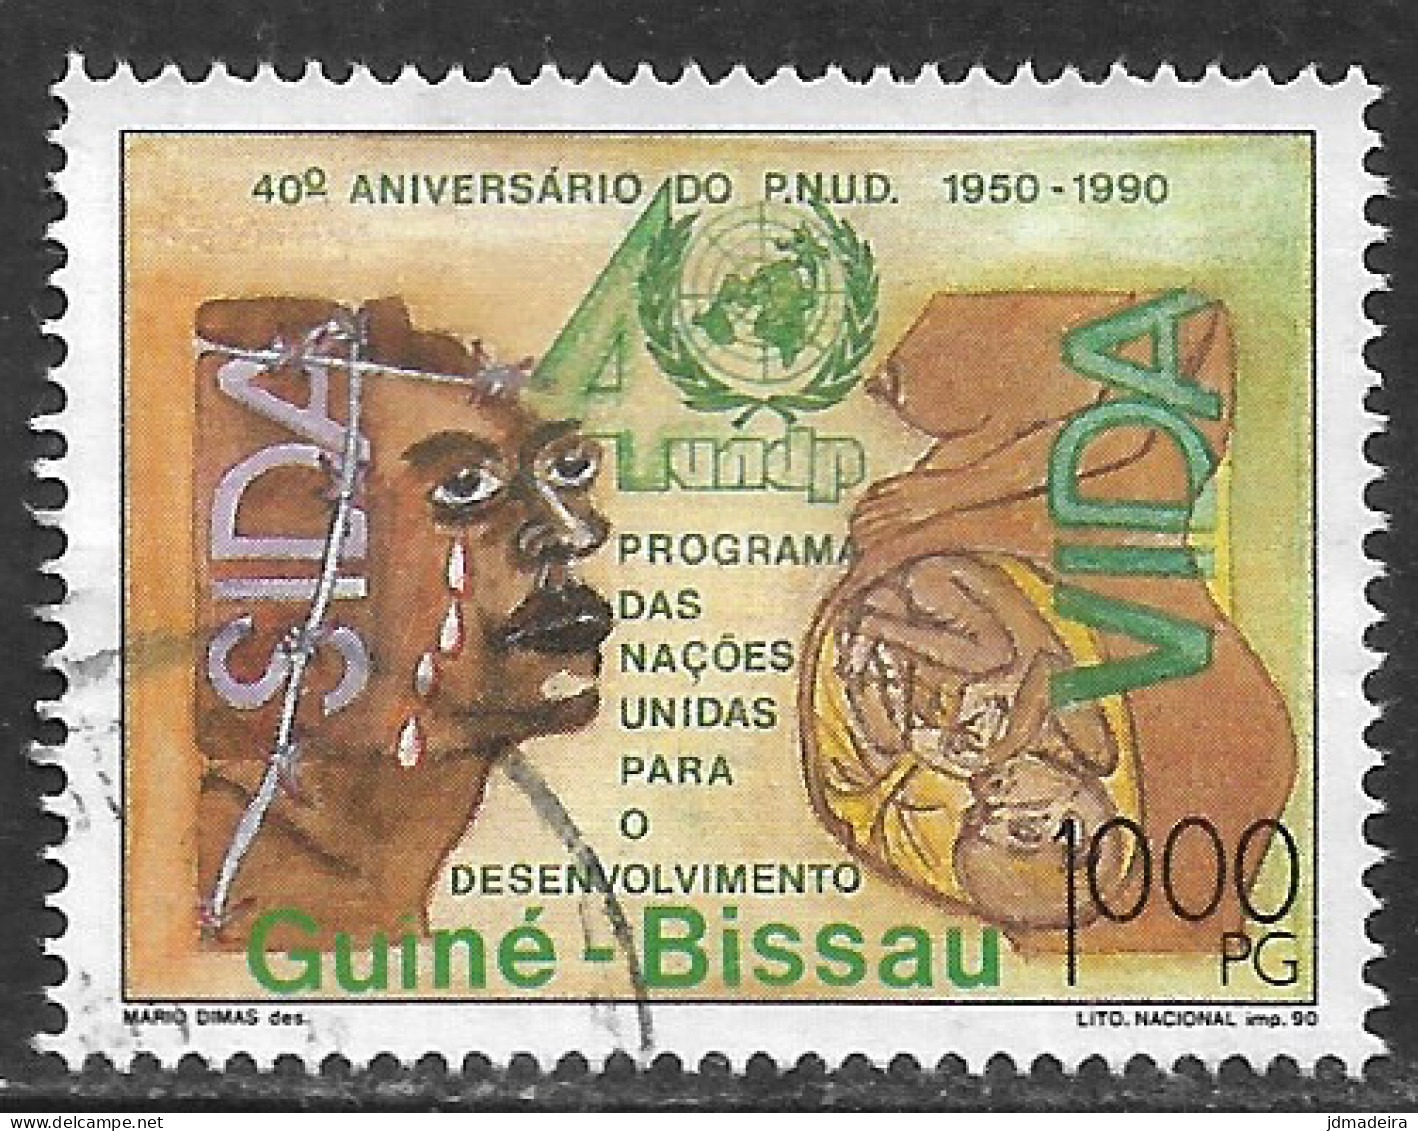 GUINE BISSAU – 1990 PNUD Anniversary 1000P Used Stamp - Guinea-Bissau